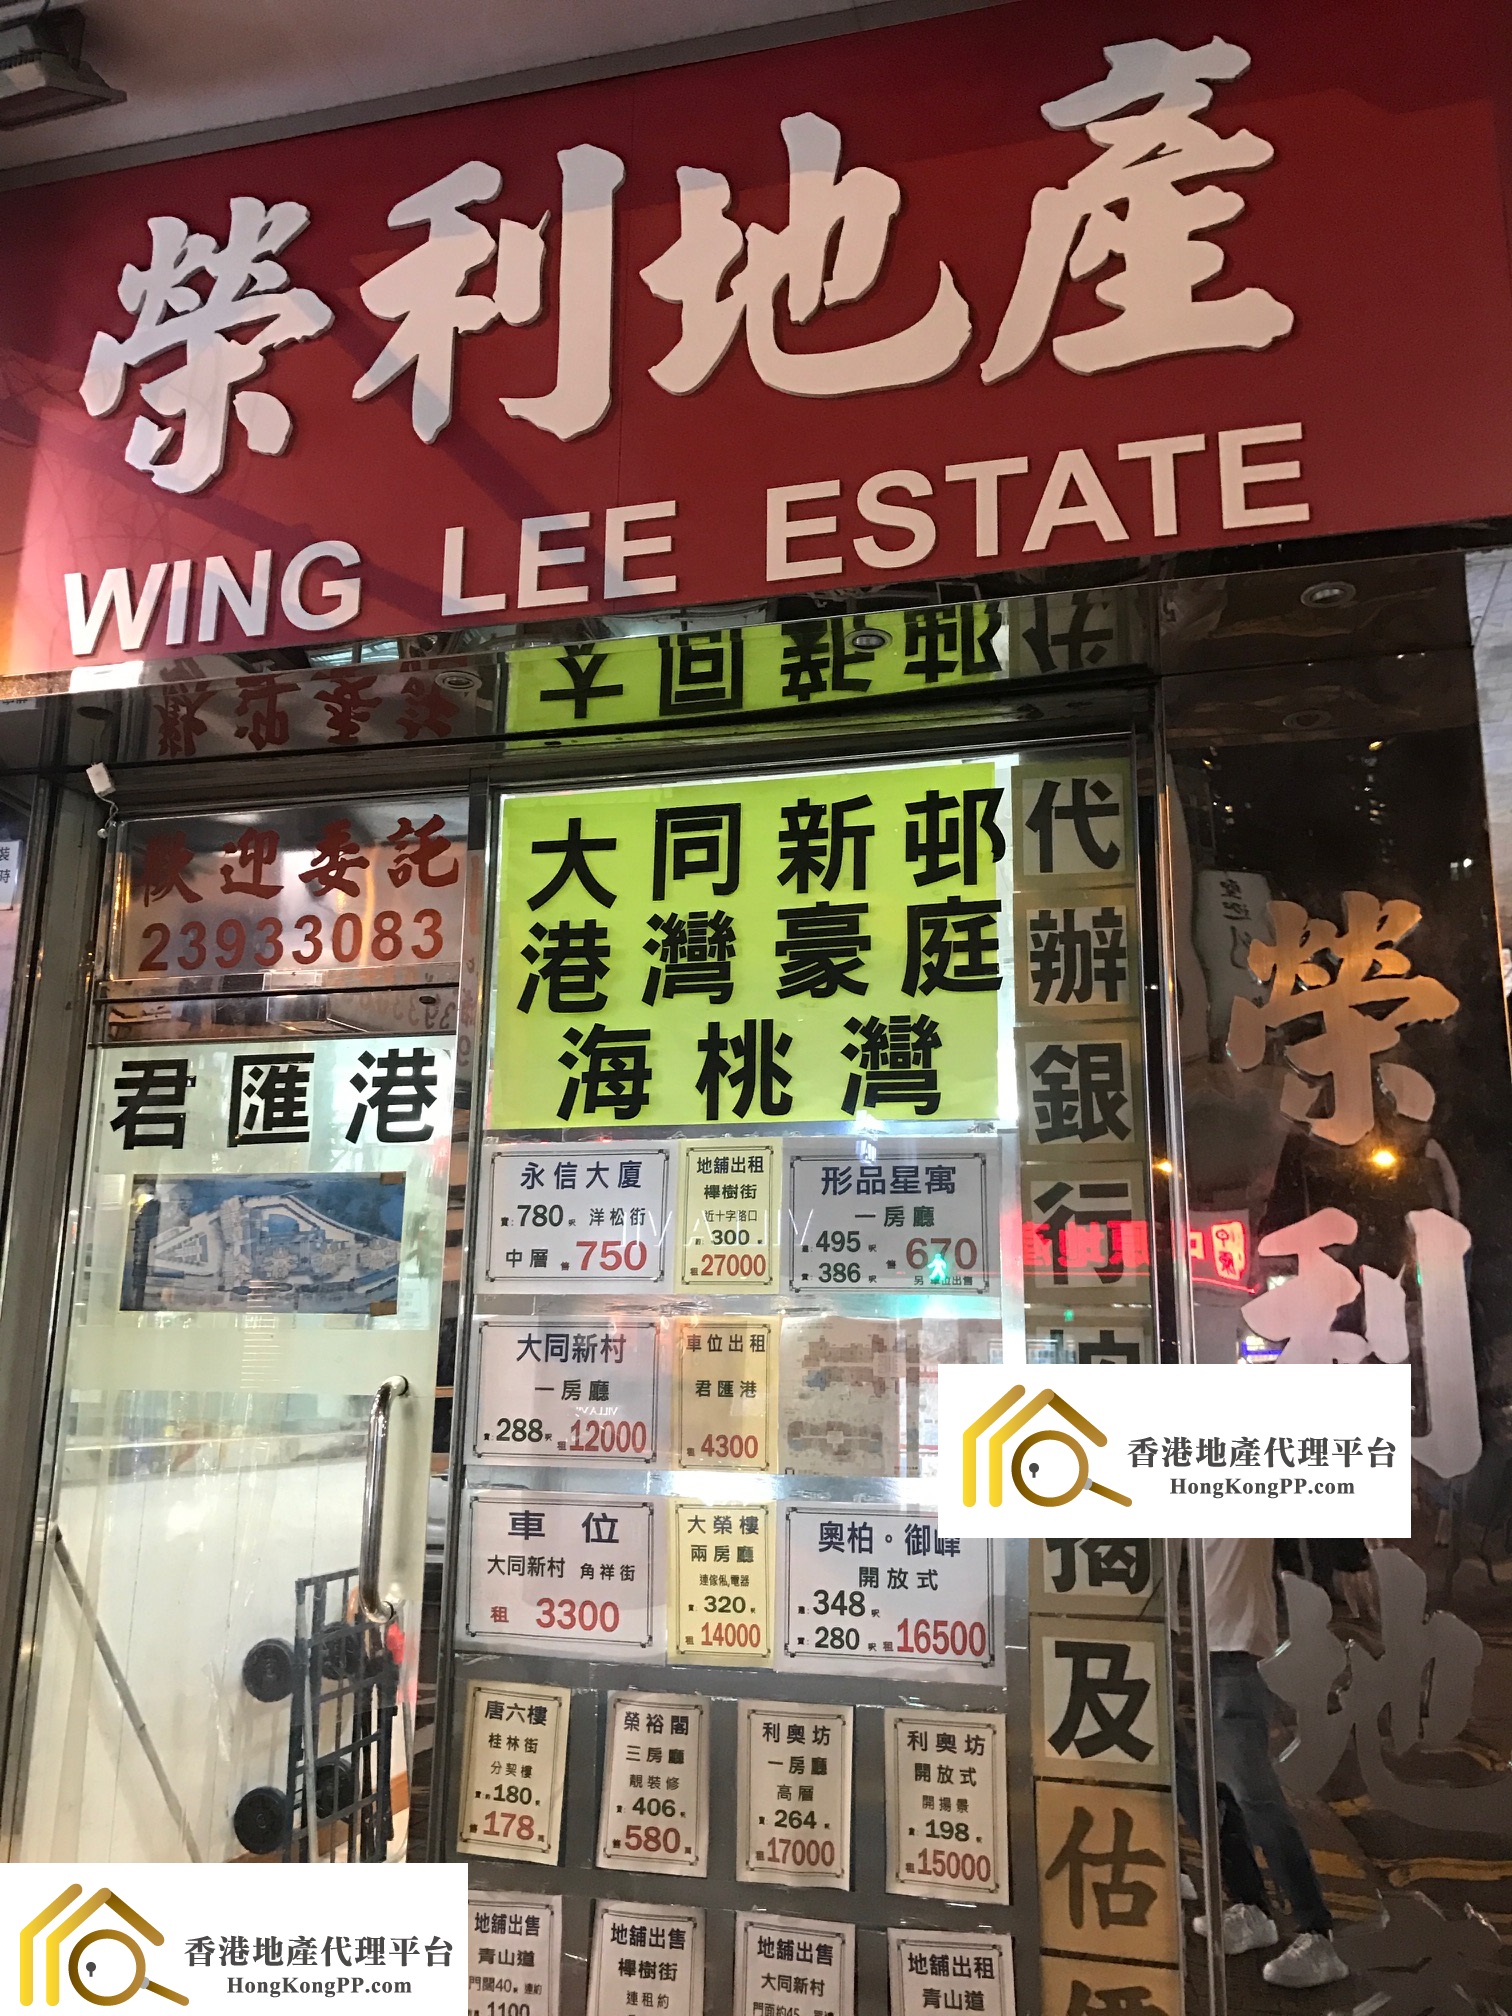 Industrial BuildingEstate Agent: 榮利地產 Wing Lee Estate